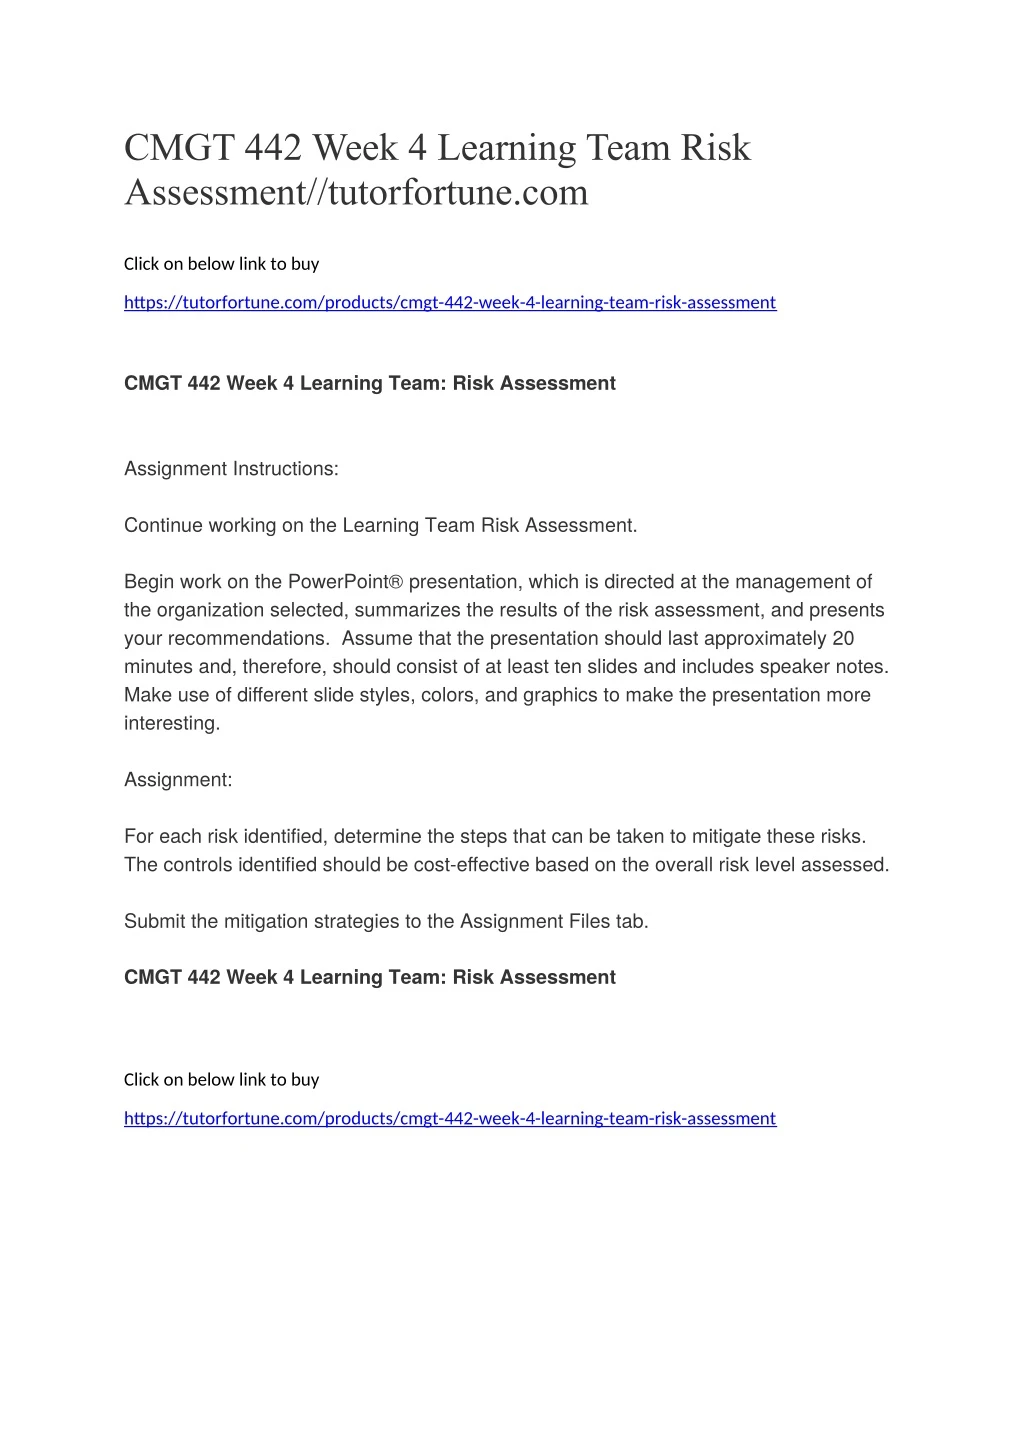 cmgt 442 week 4 learning team risk assessment